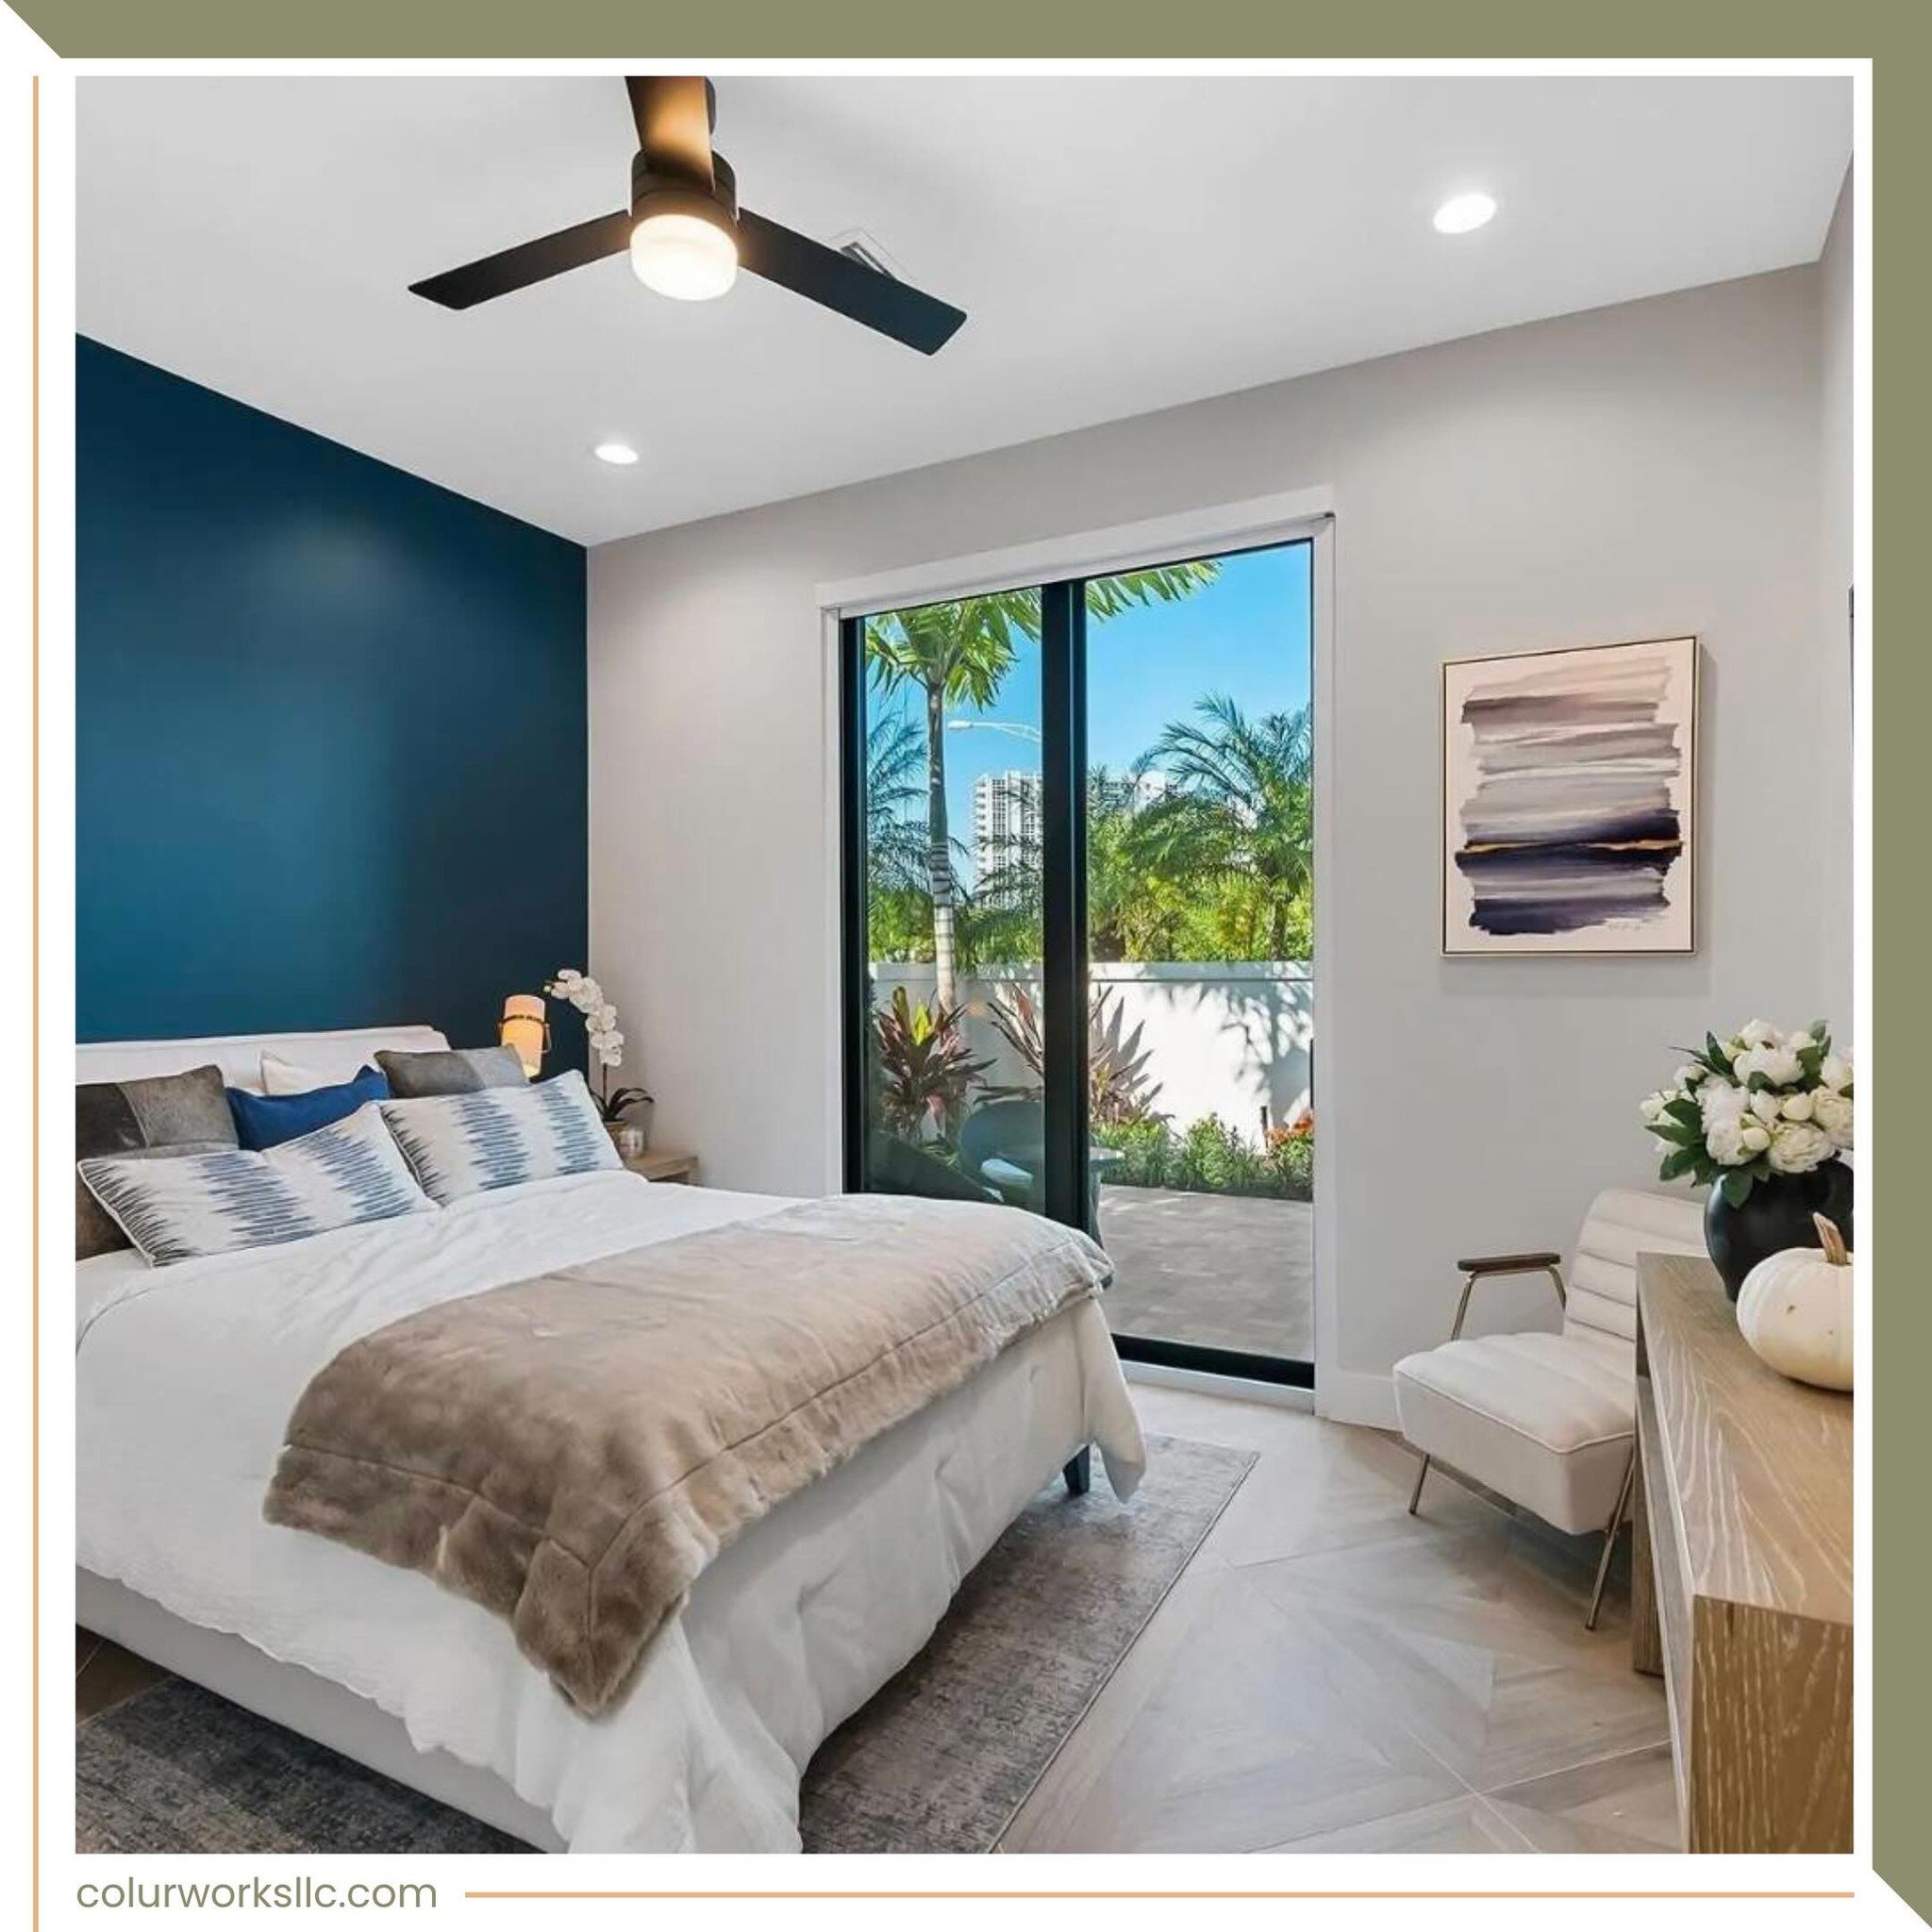 Beautiful blue accent wall. Bringing Miami vibes indoors!

Colur Works LLC | call: (786) 692-8933
👉 colurworksllc.com